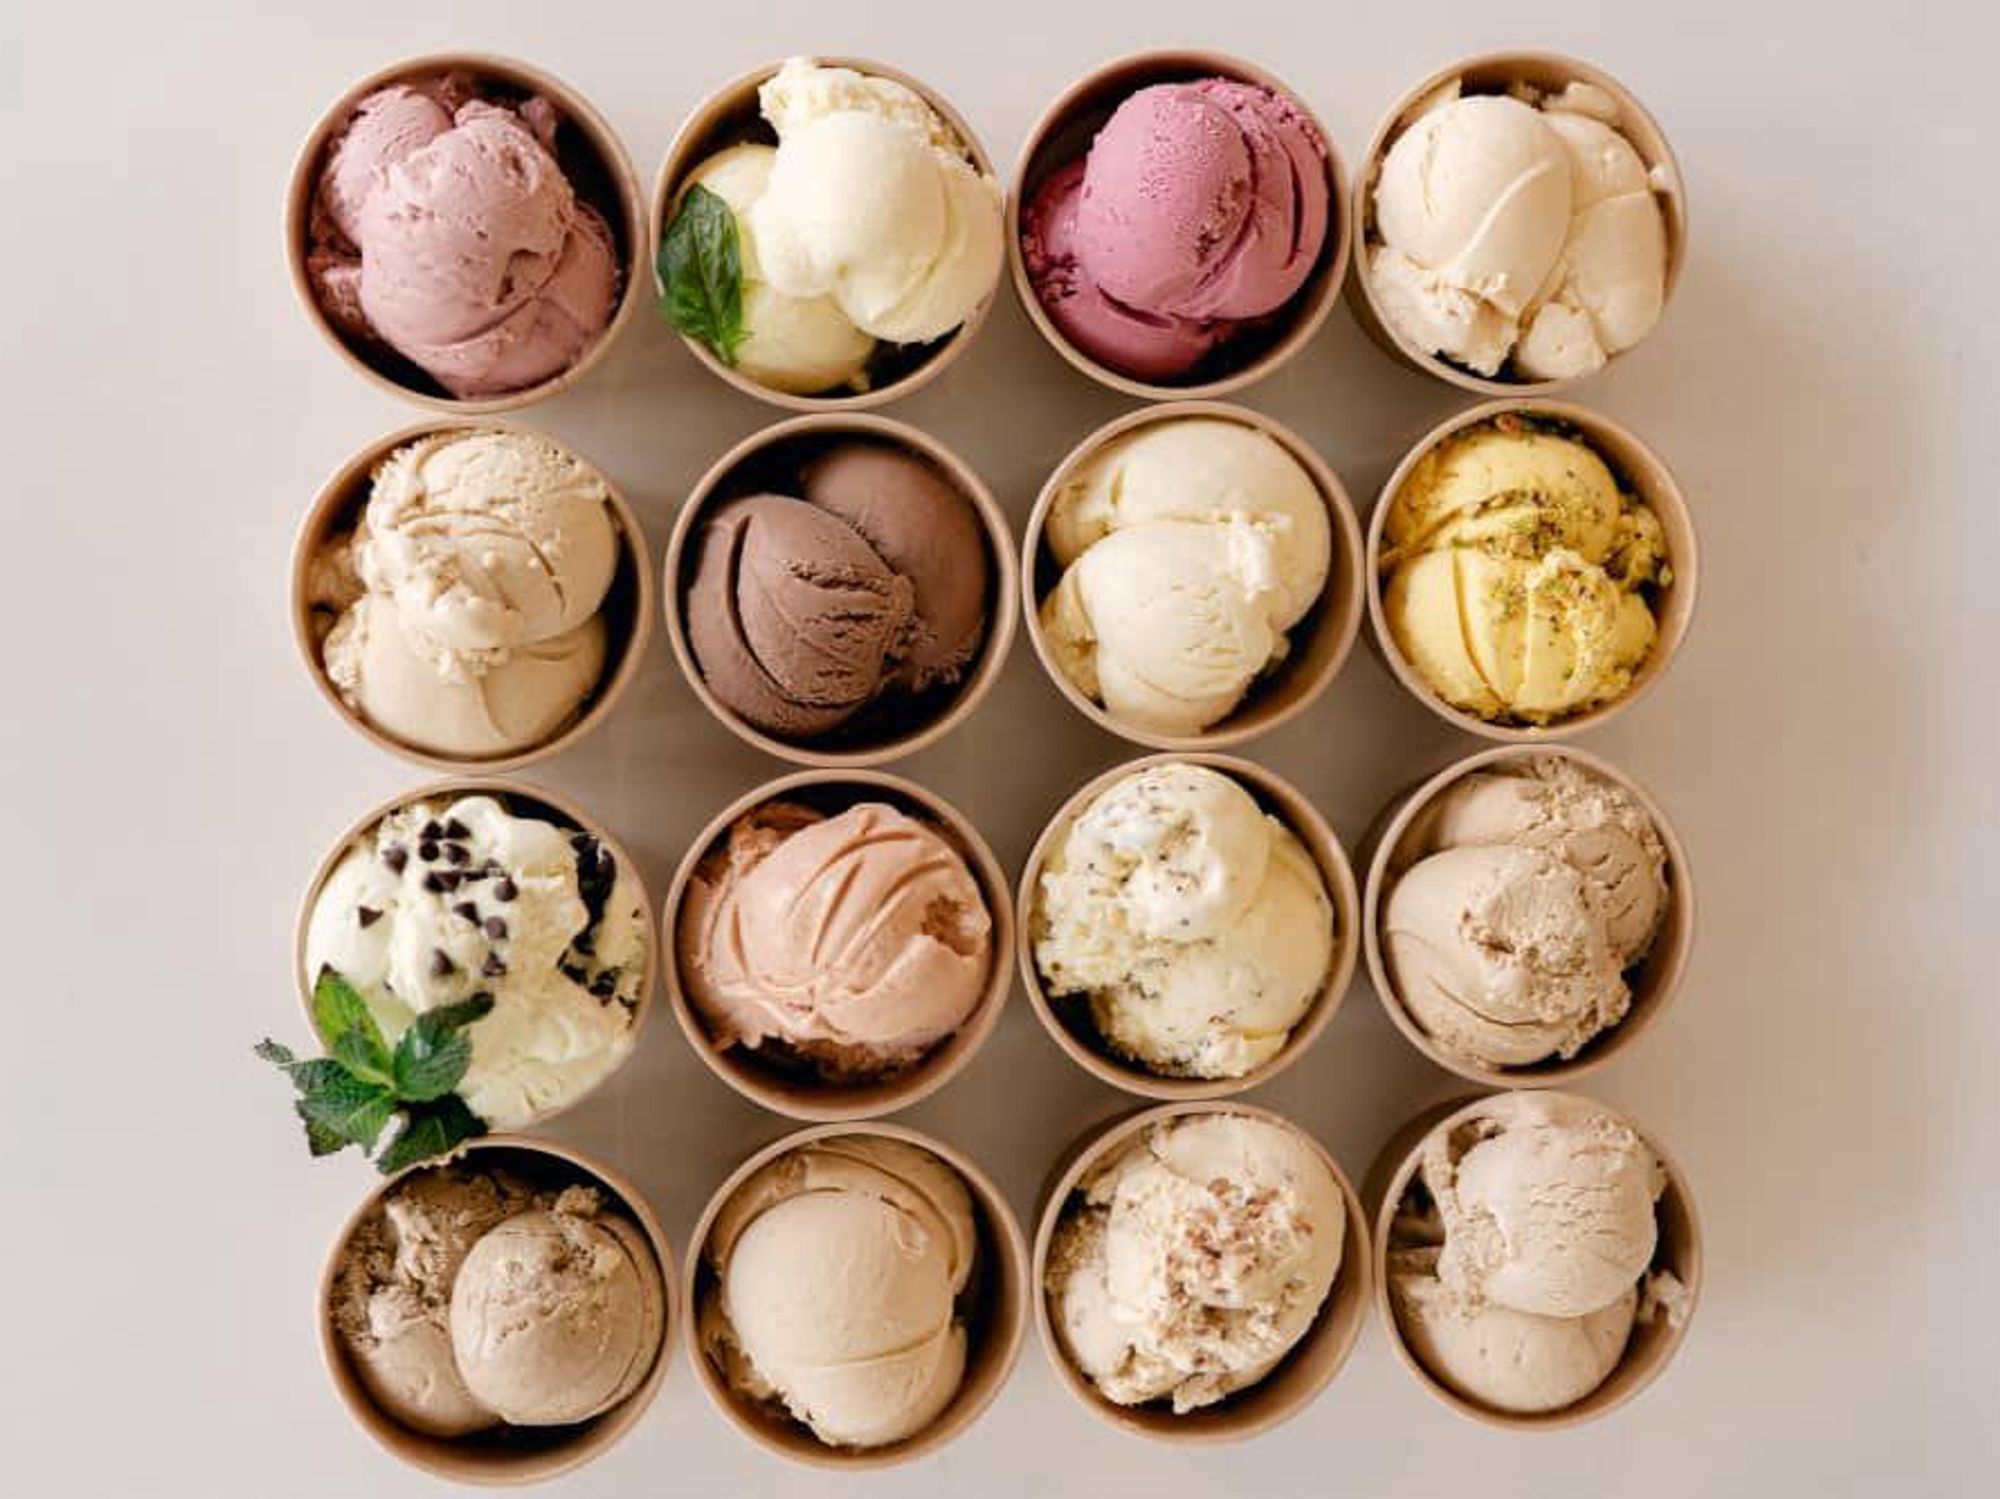 Craft Creamery 16 flavors